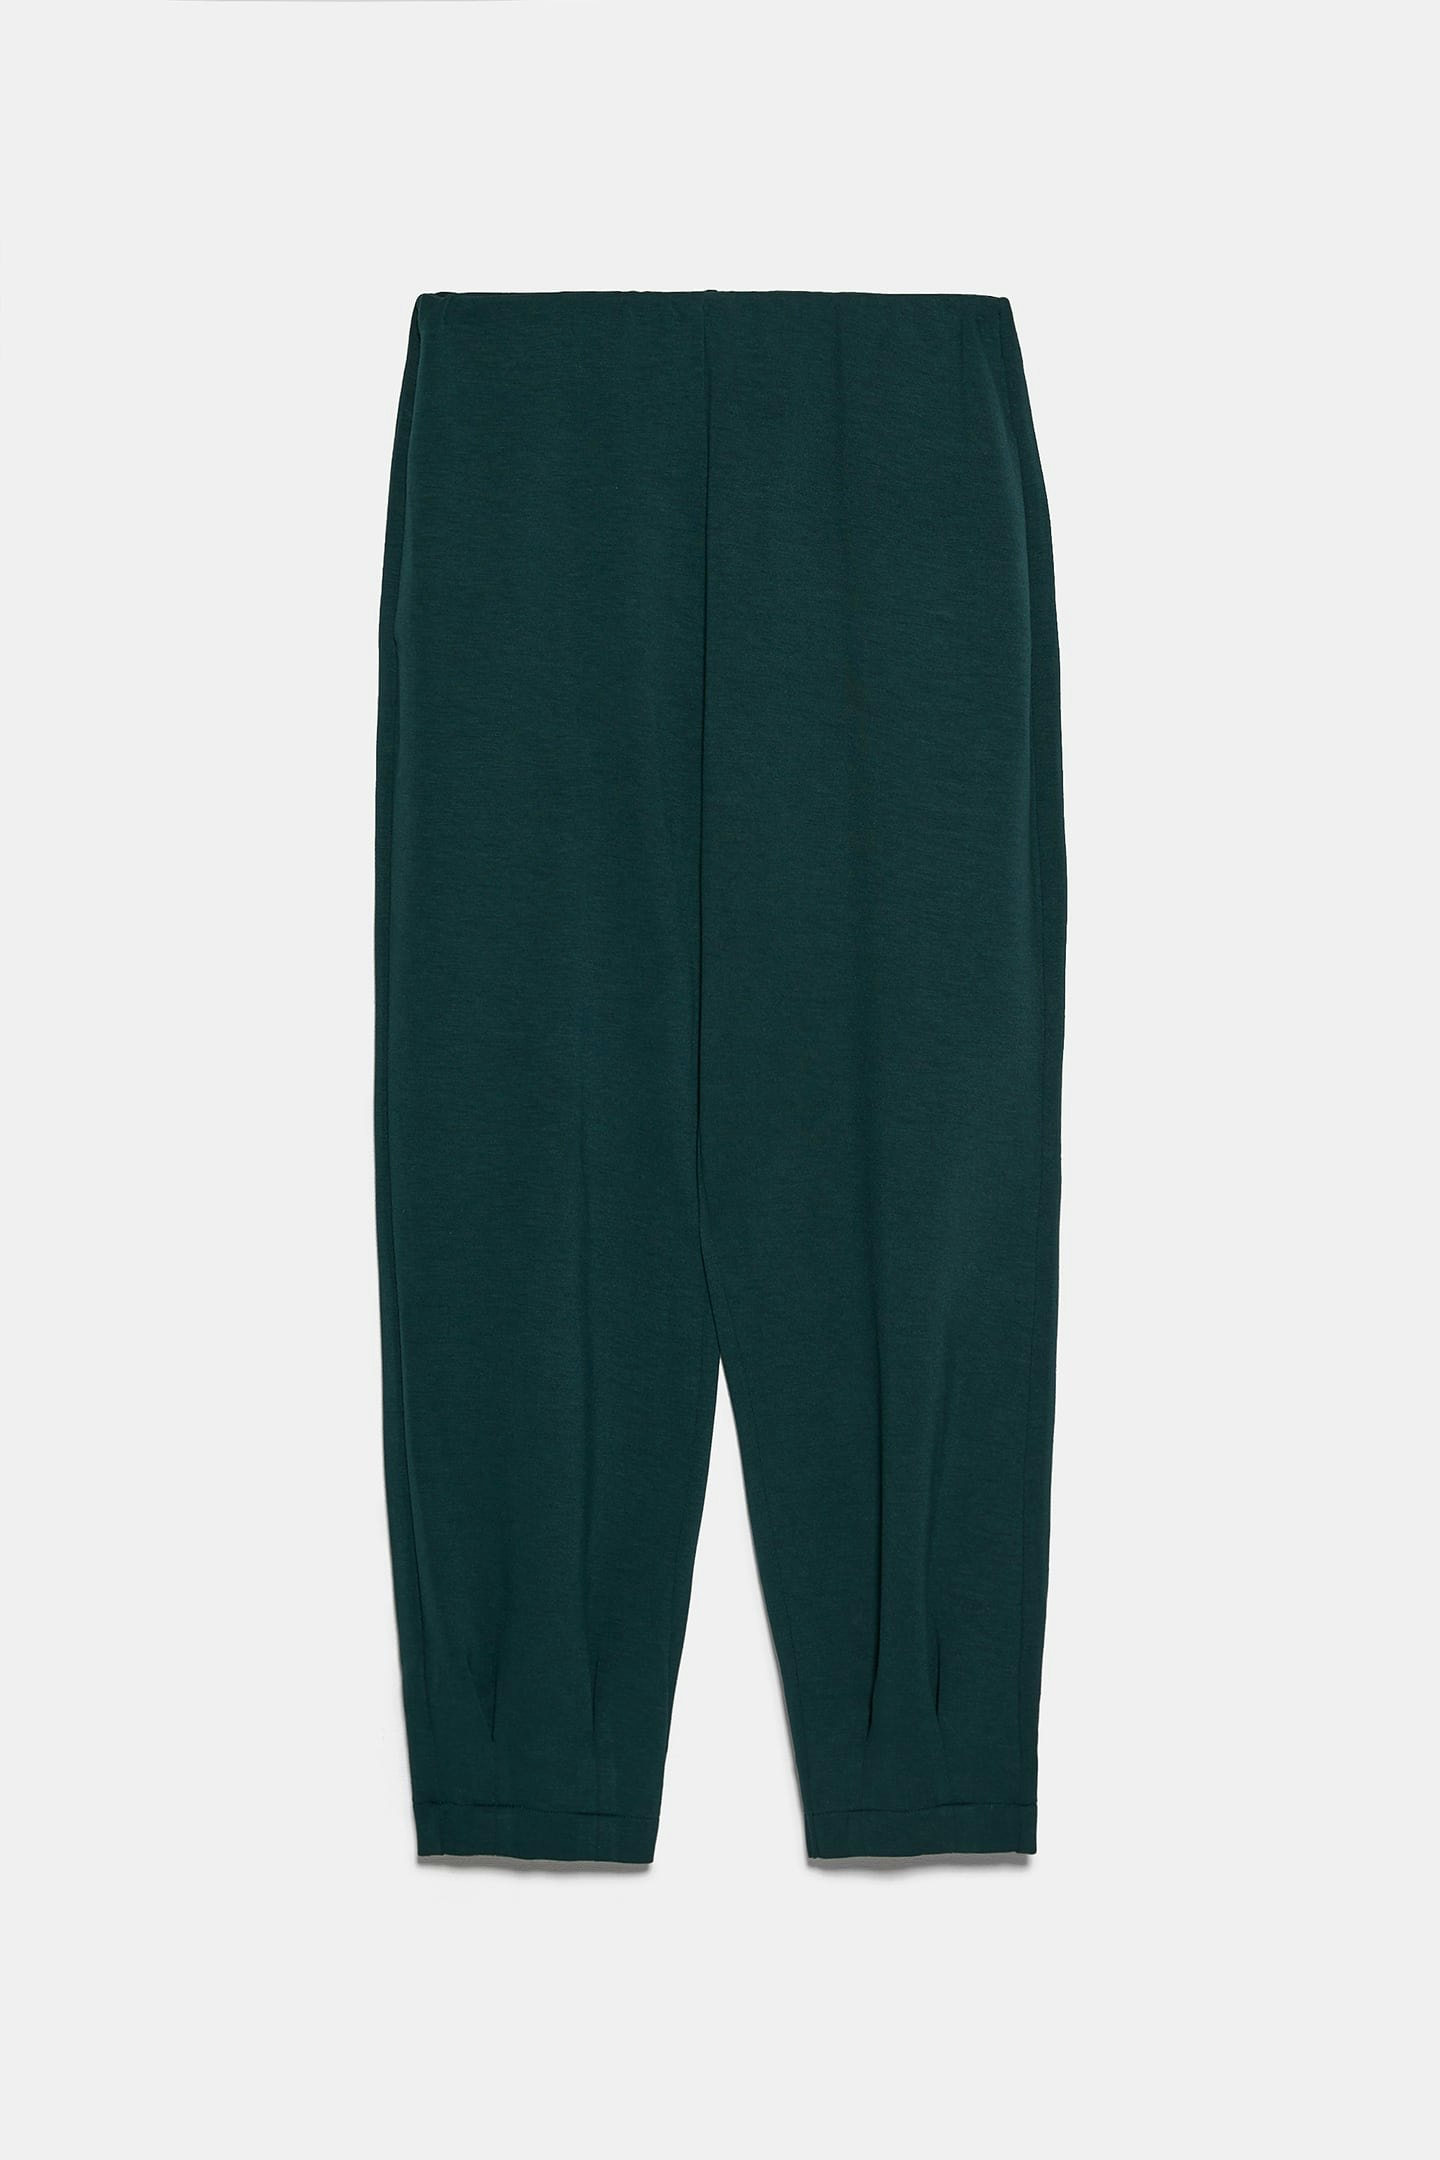 Trousers, £19.99, Zara